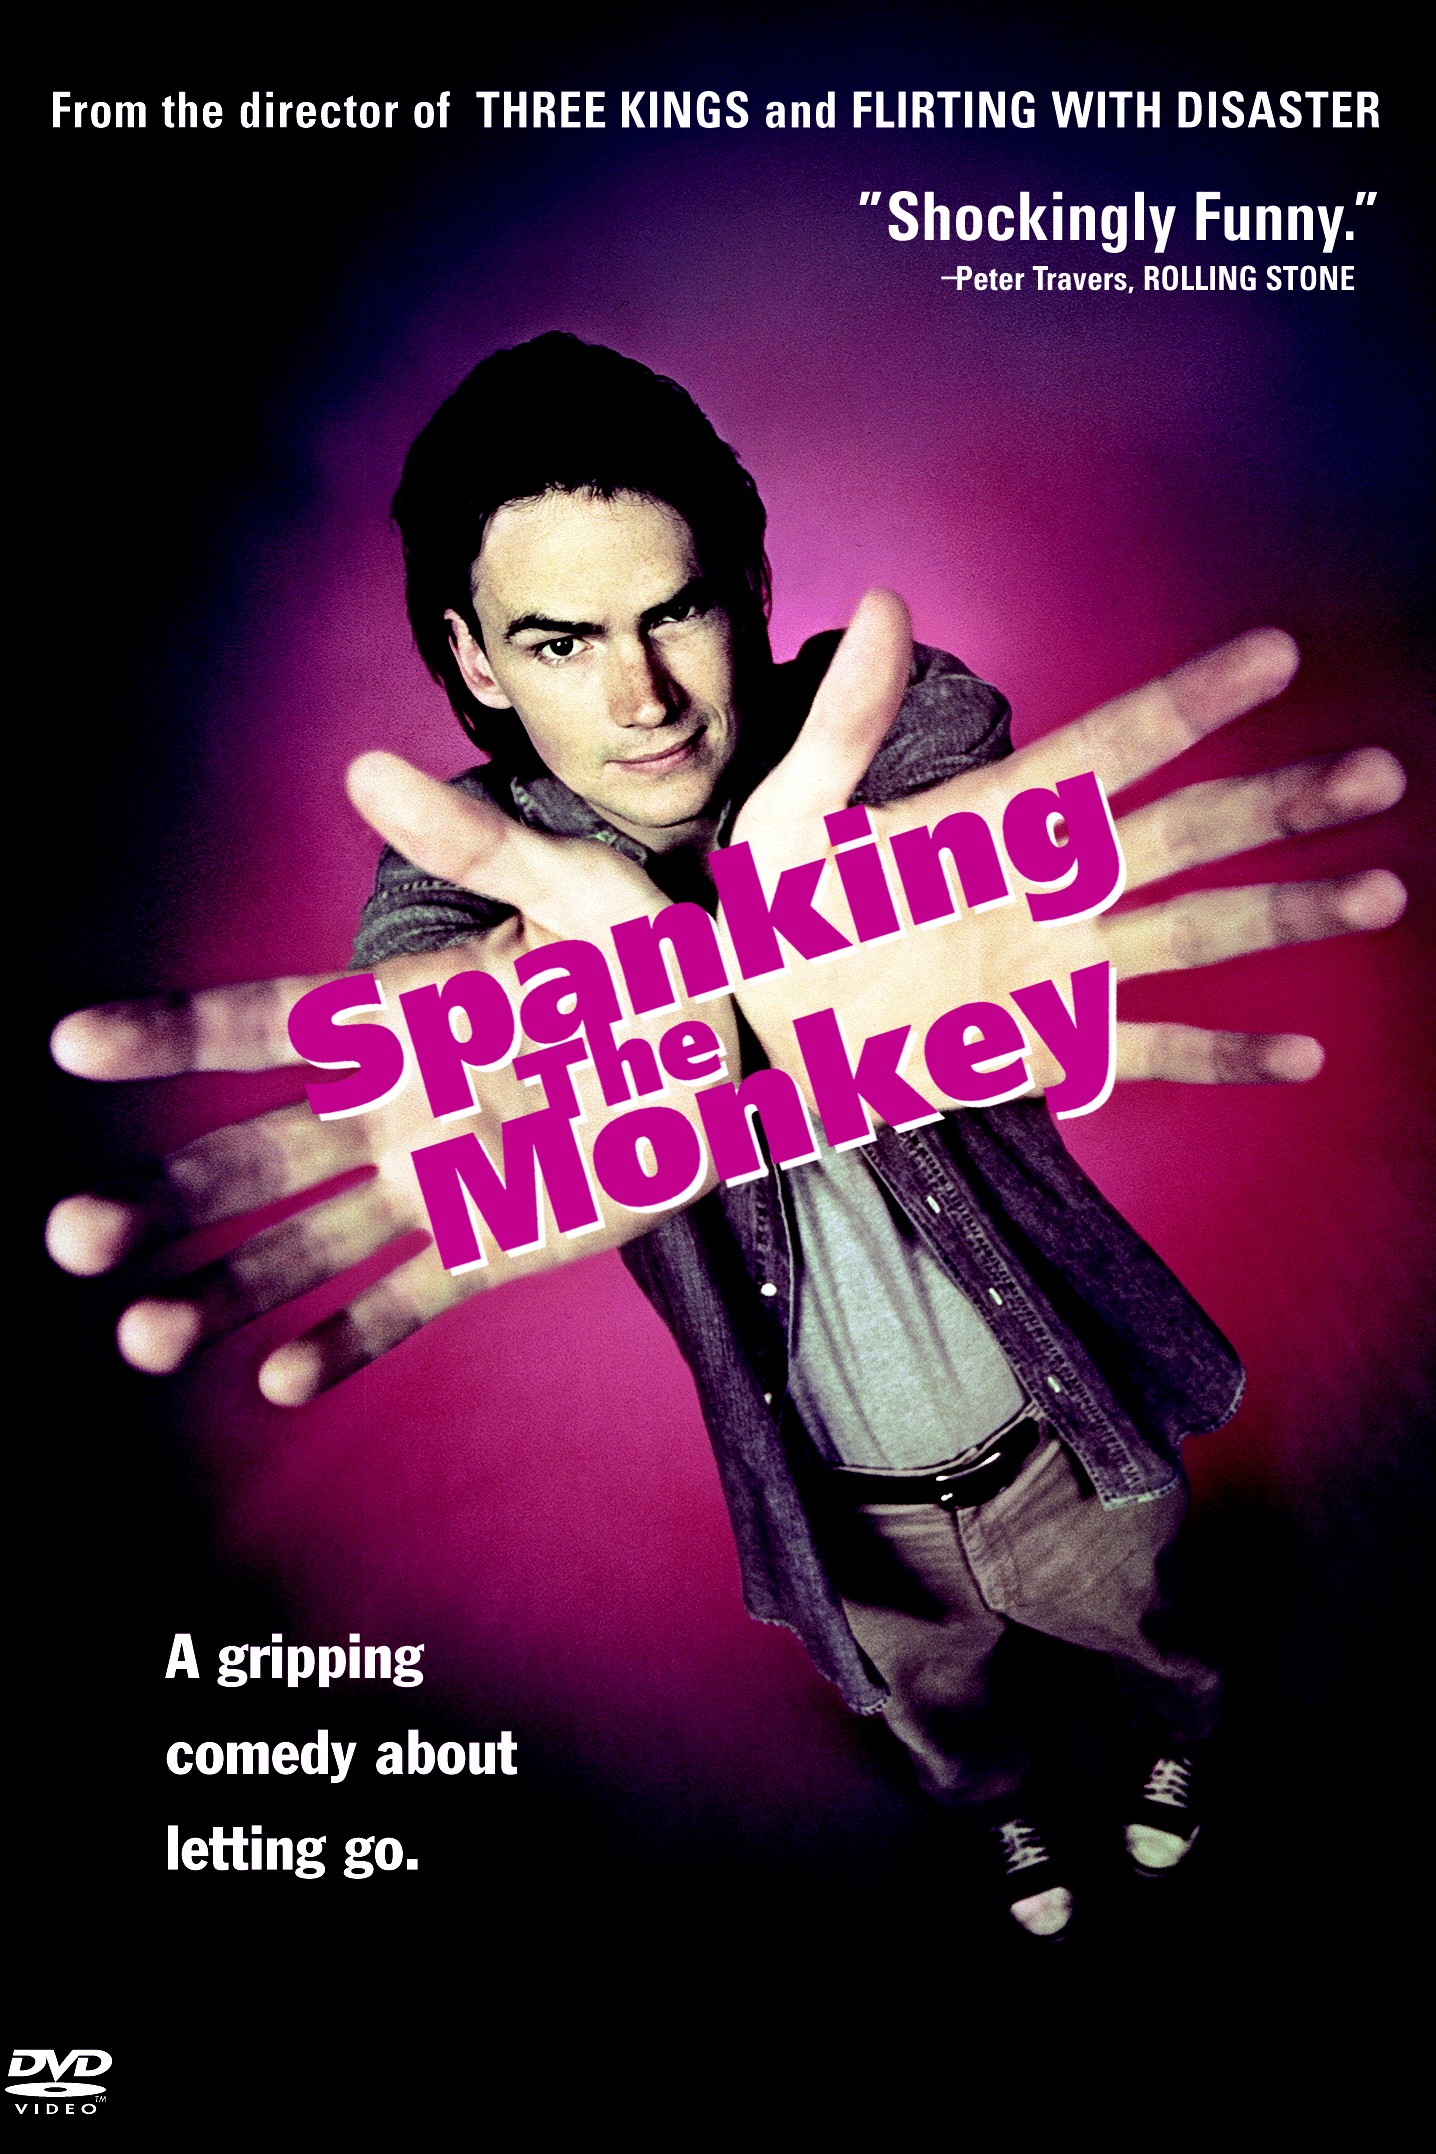 Spanking The Monkey Movie Reviews